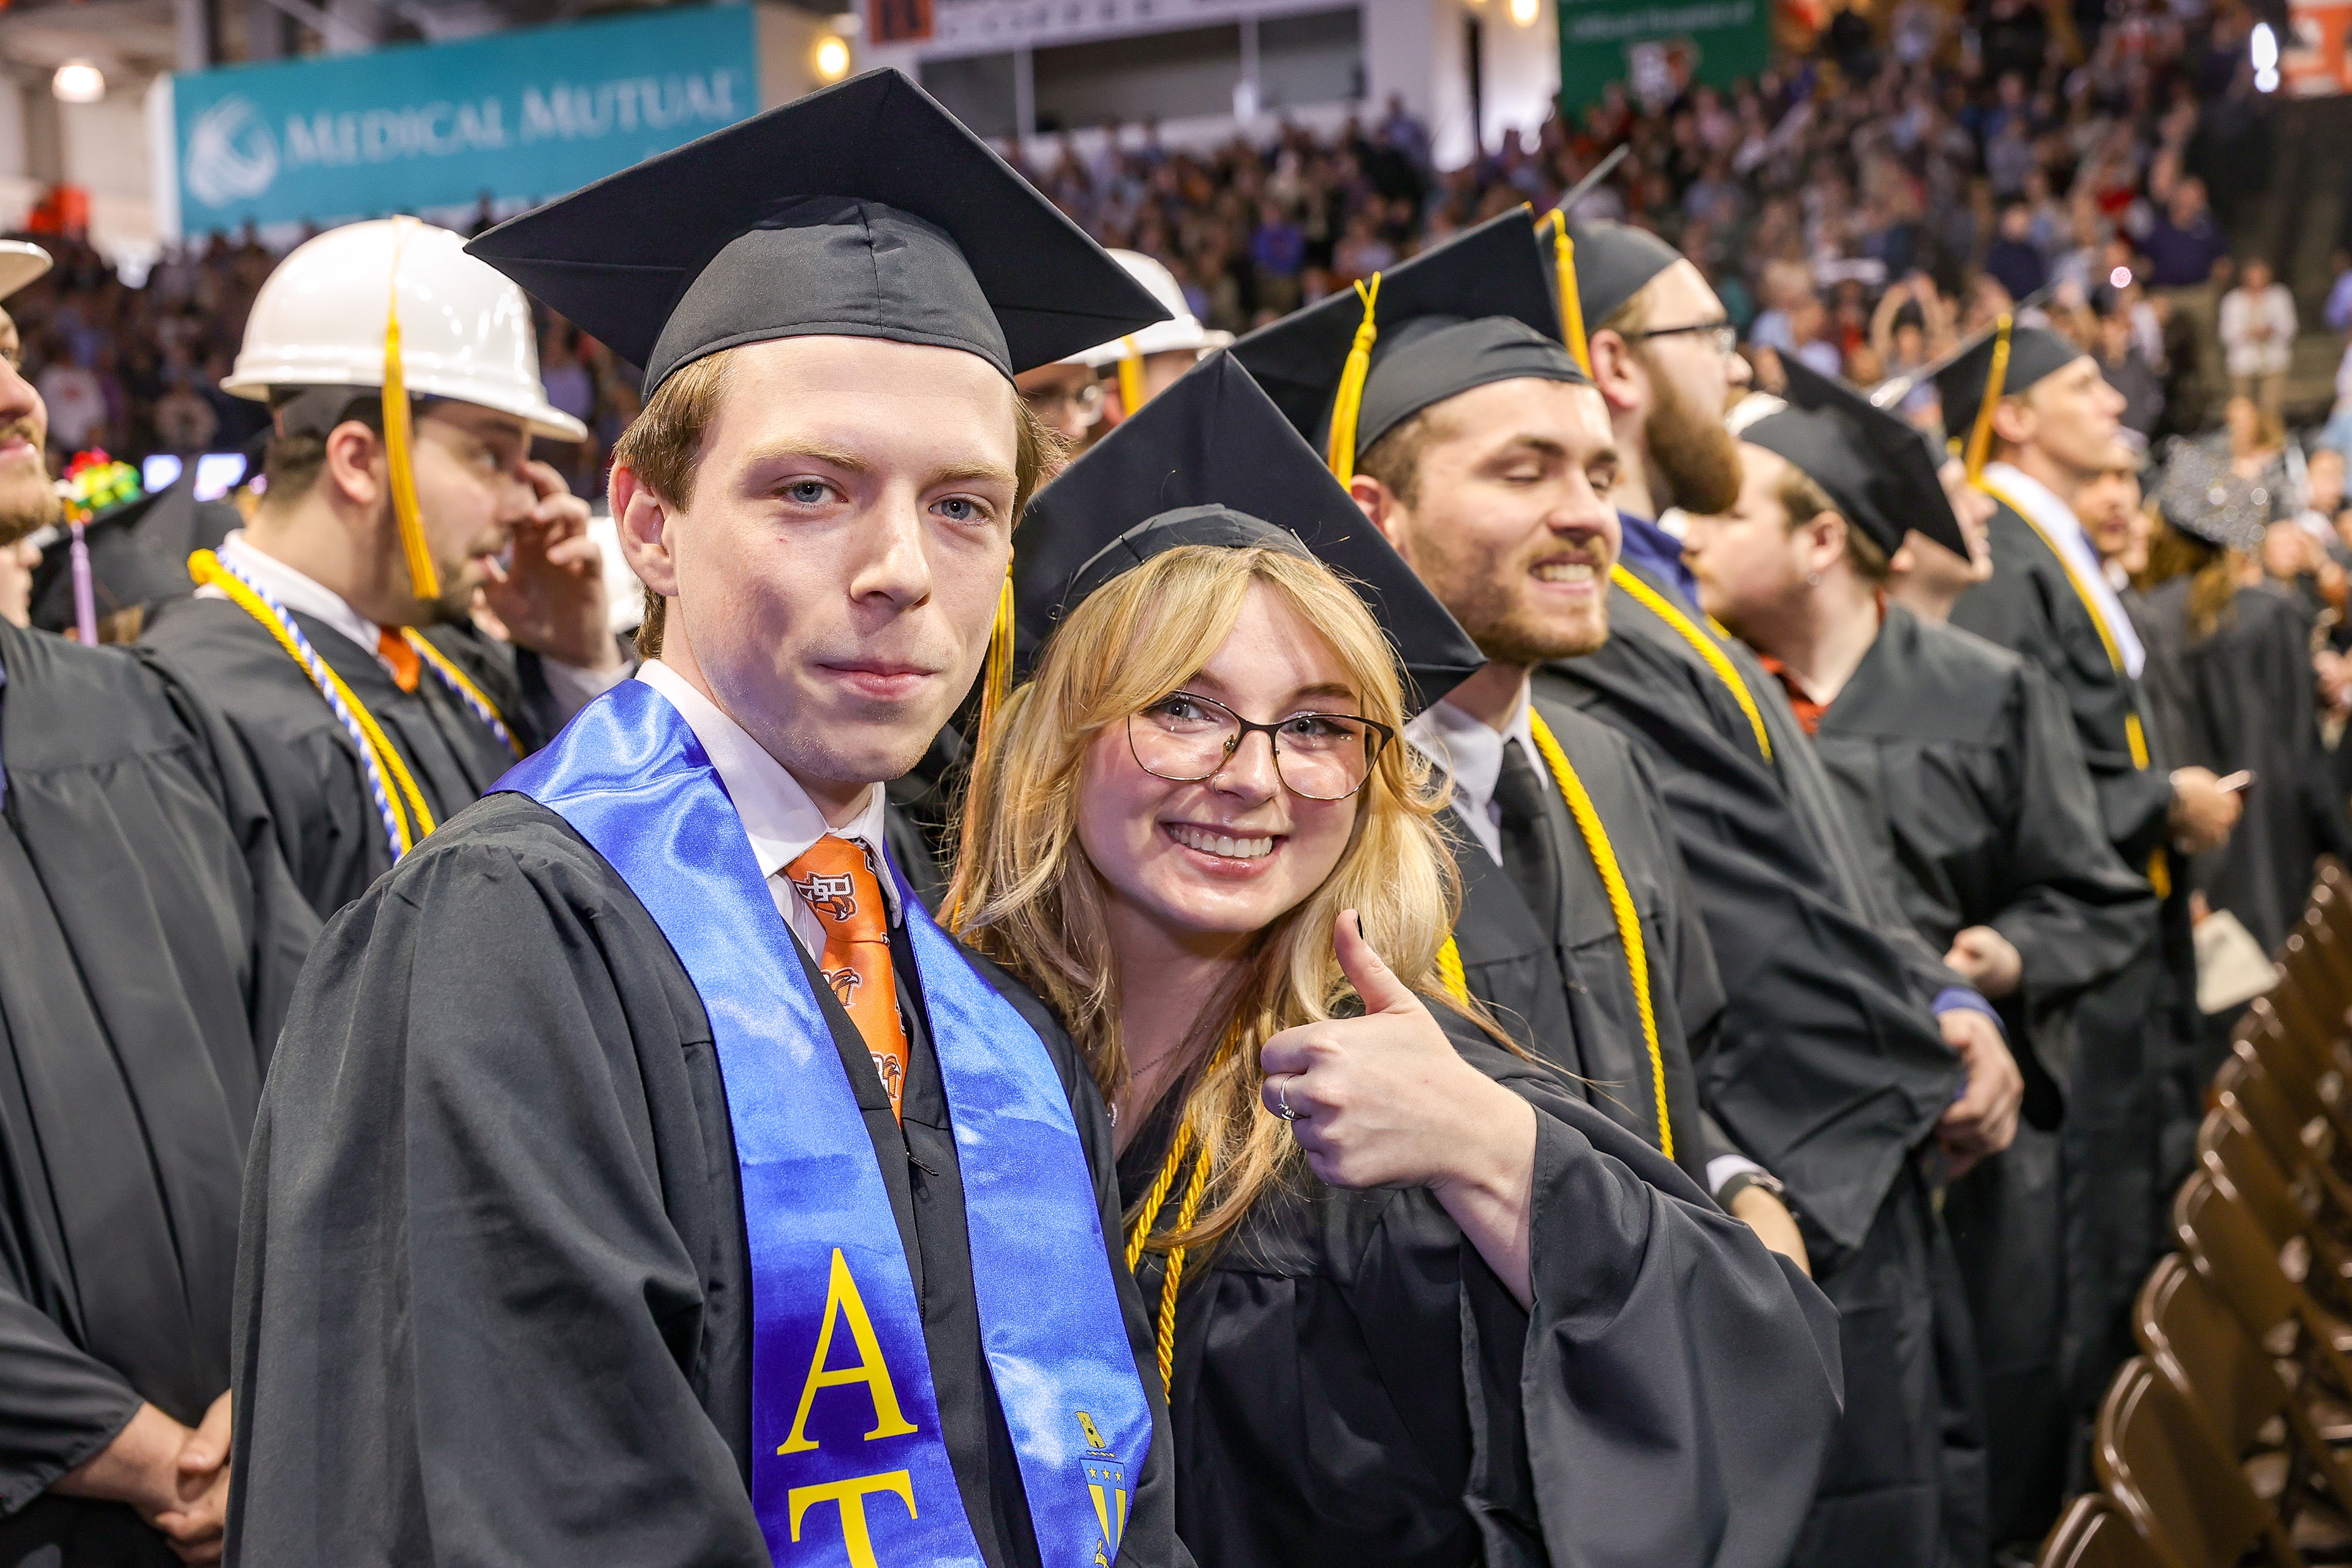 Two BGSU graduates pose with a thumbs up at graduation 